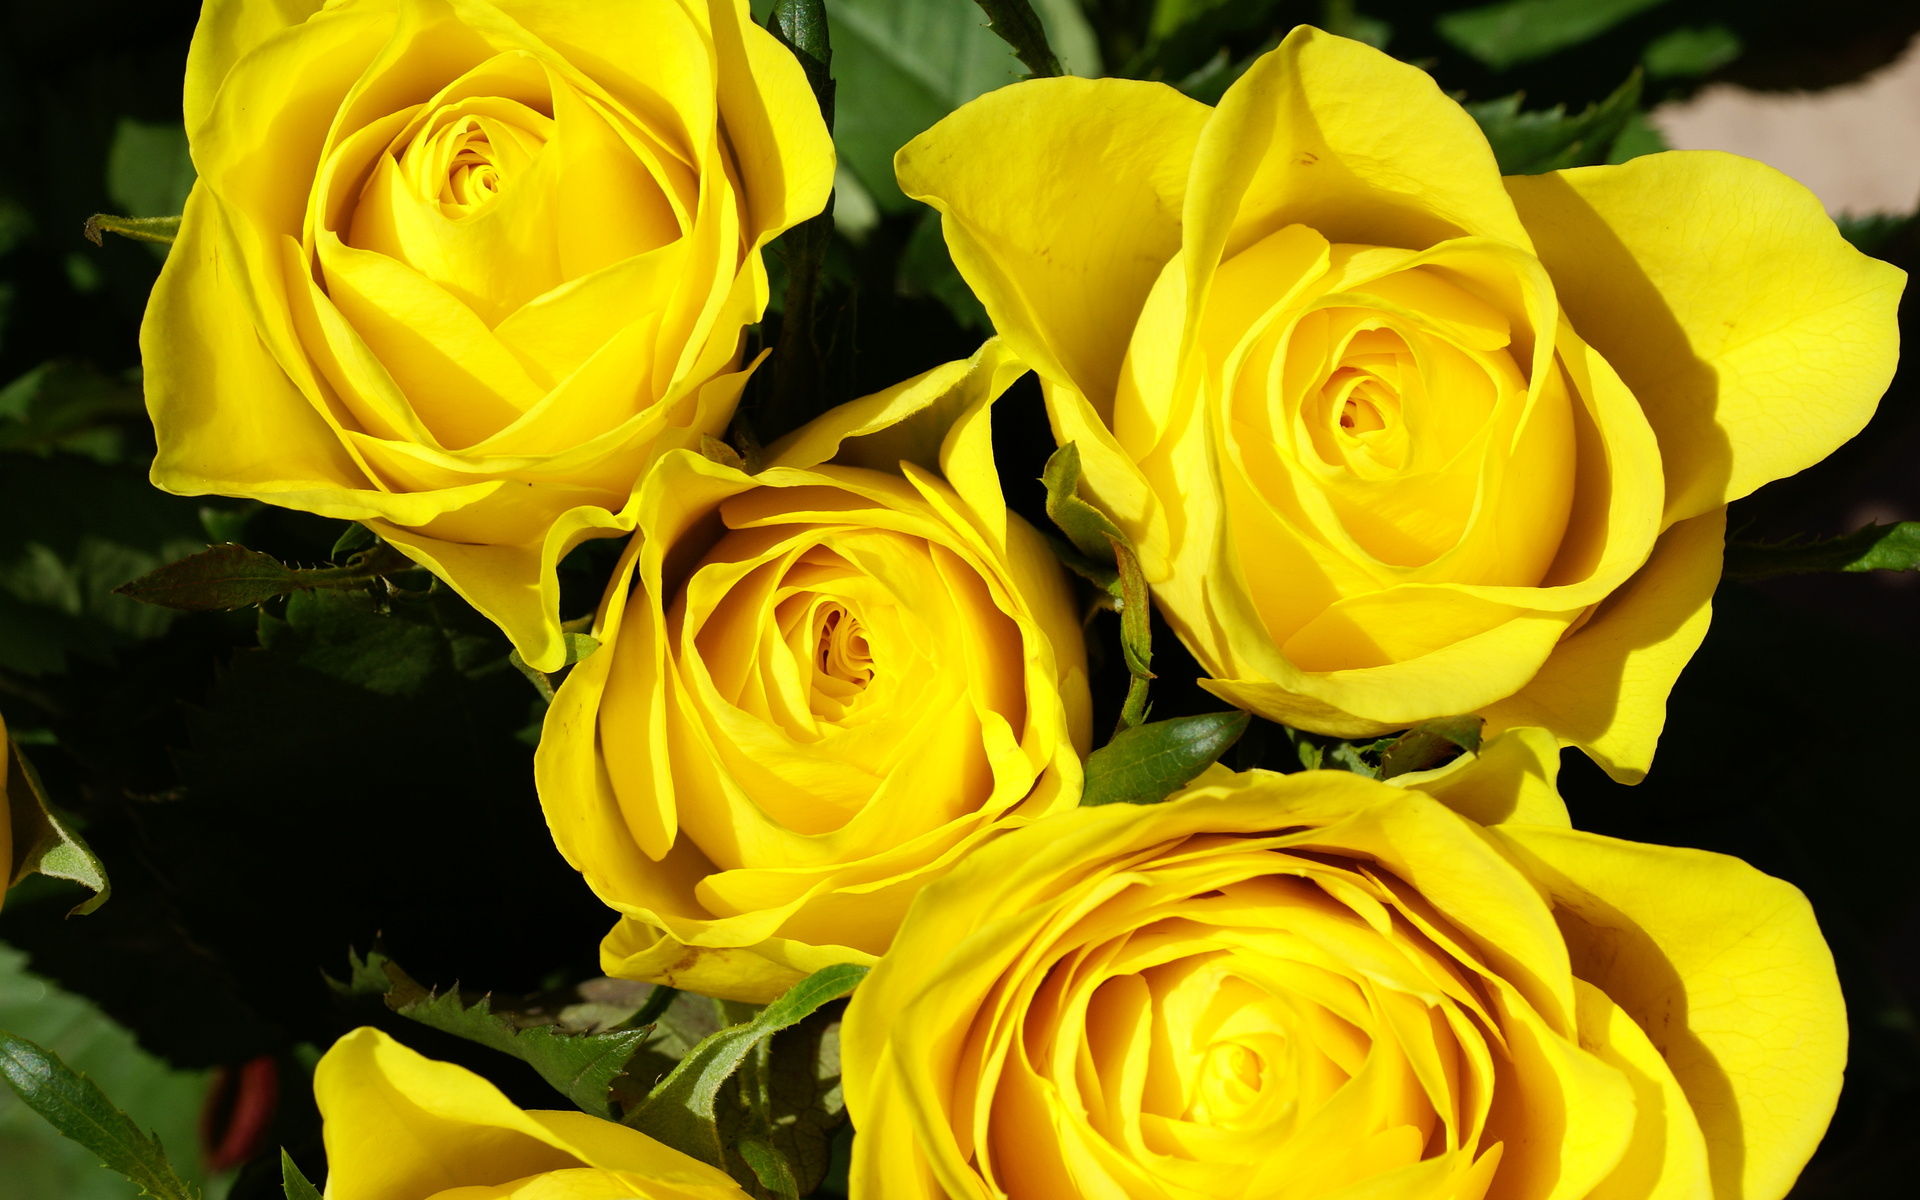  3D  Yellow  Rose  Wallpapers  Best Yellow  Rose  HD  LiveWallpaper